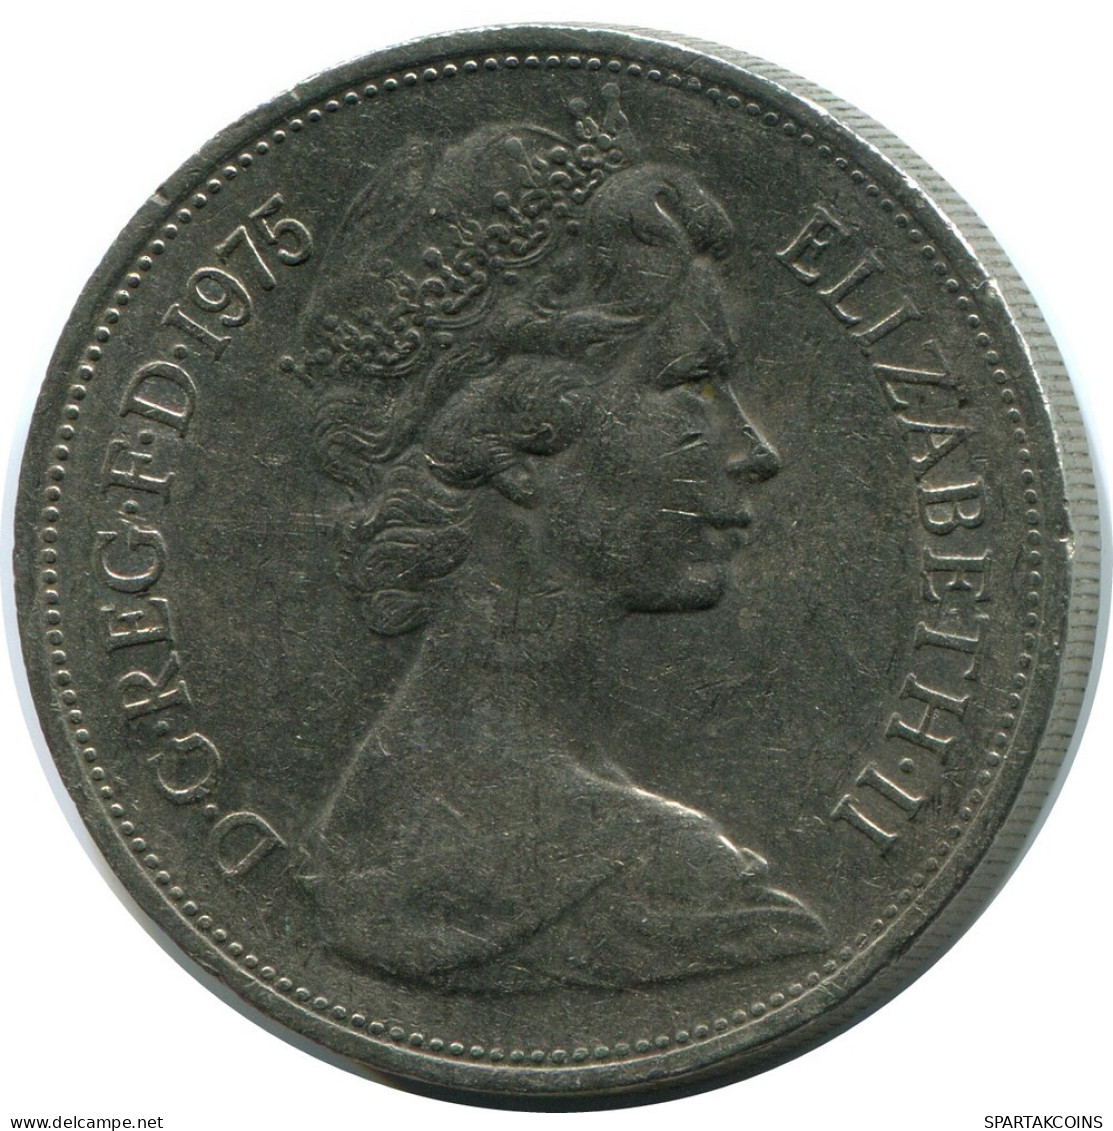 10 NEW PENCE 1975 UK GROßBRITANNIEN GREAT BRITAIN Münze #AZ021.D.A - 10 Pence & 10 New Pence